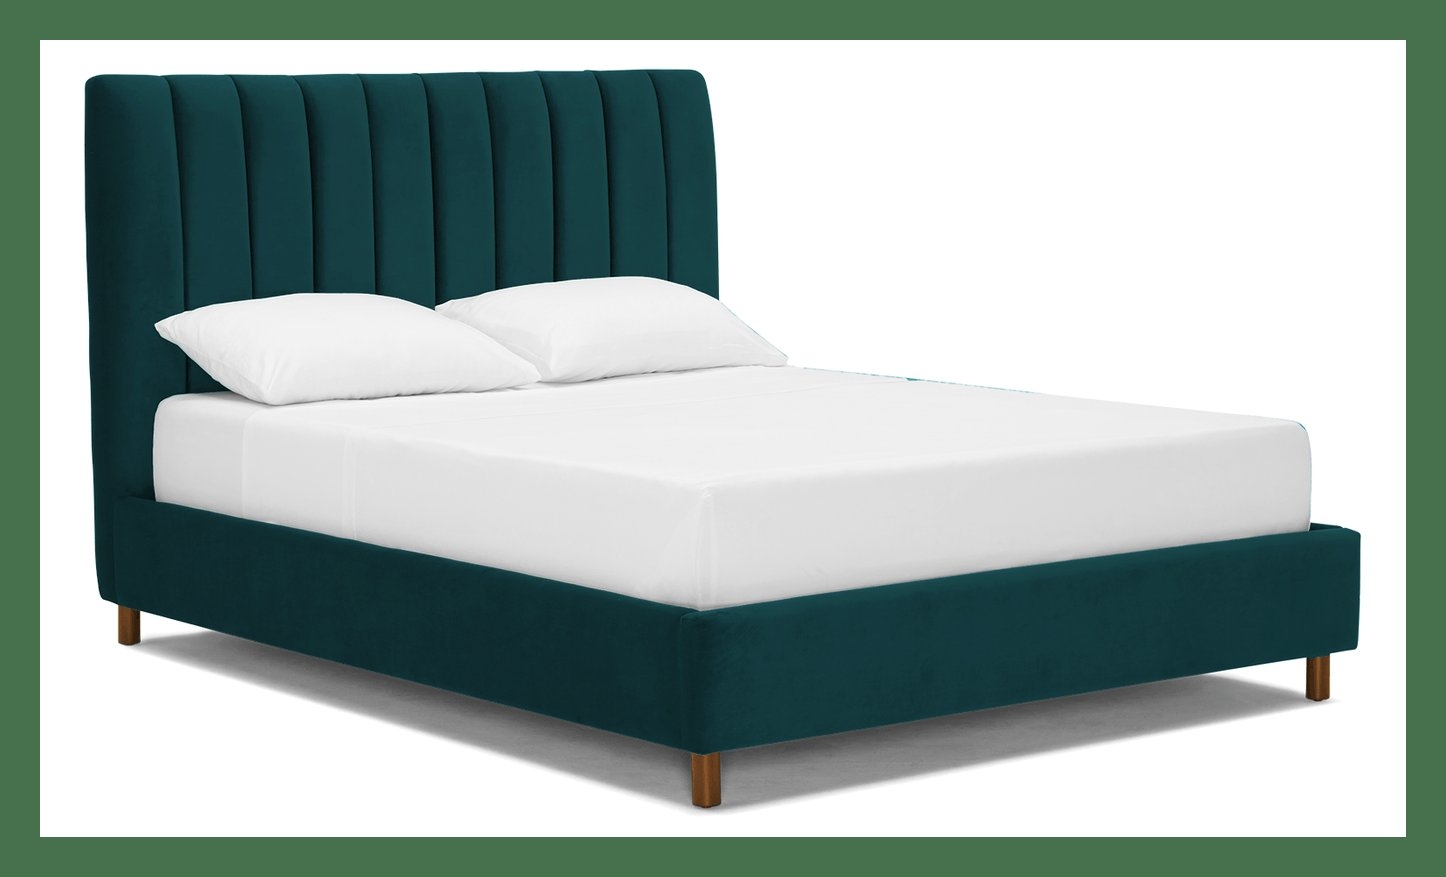 Lotta Mid Century Modern Bed - Queen - Royale Peacock  - Mocha - Image 0